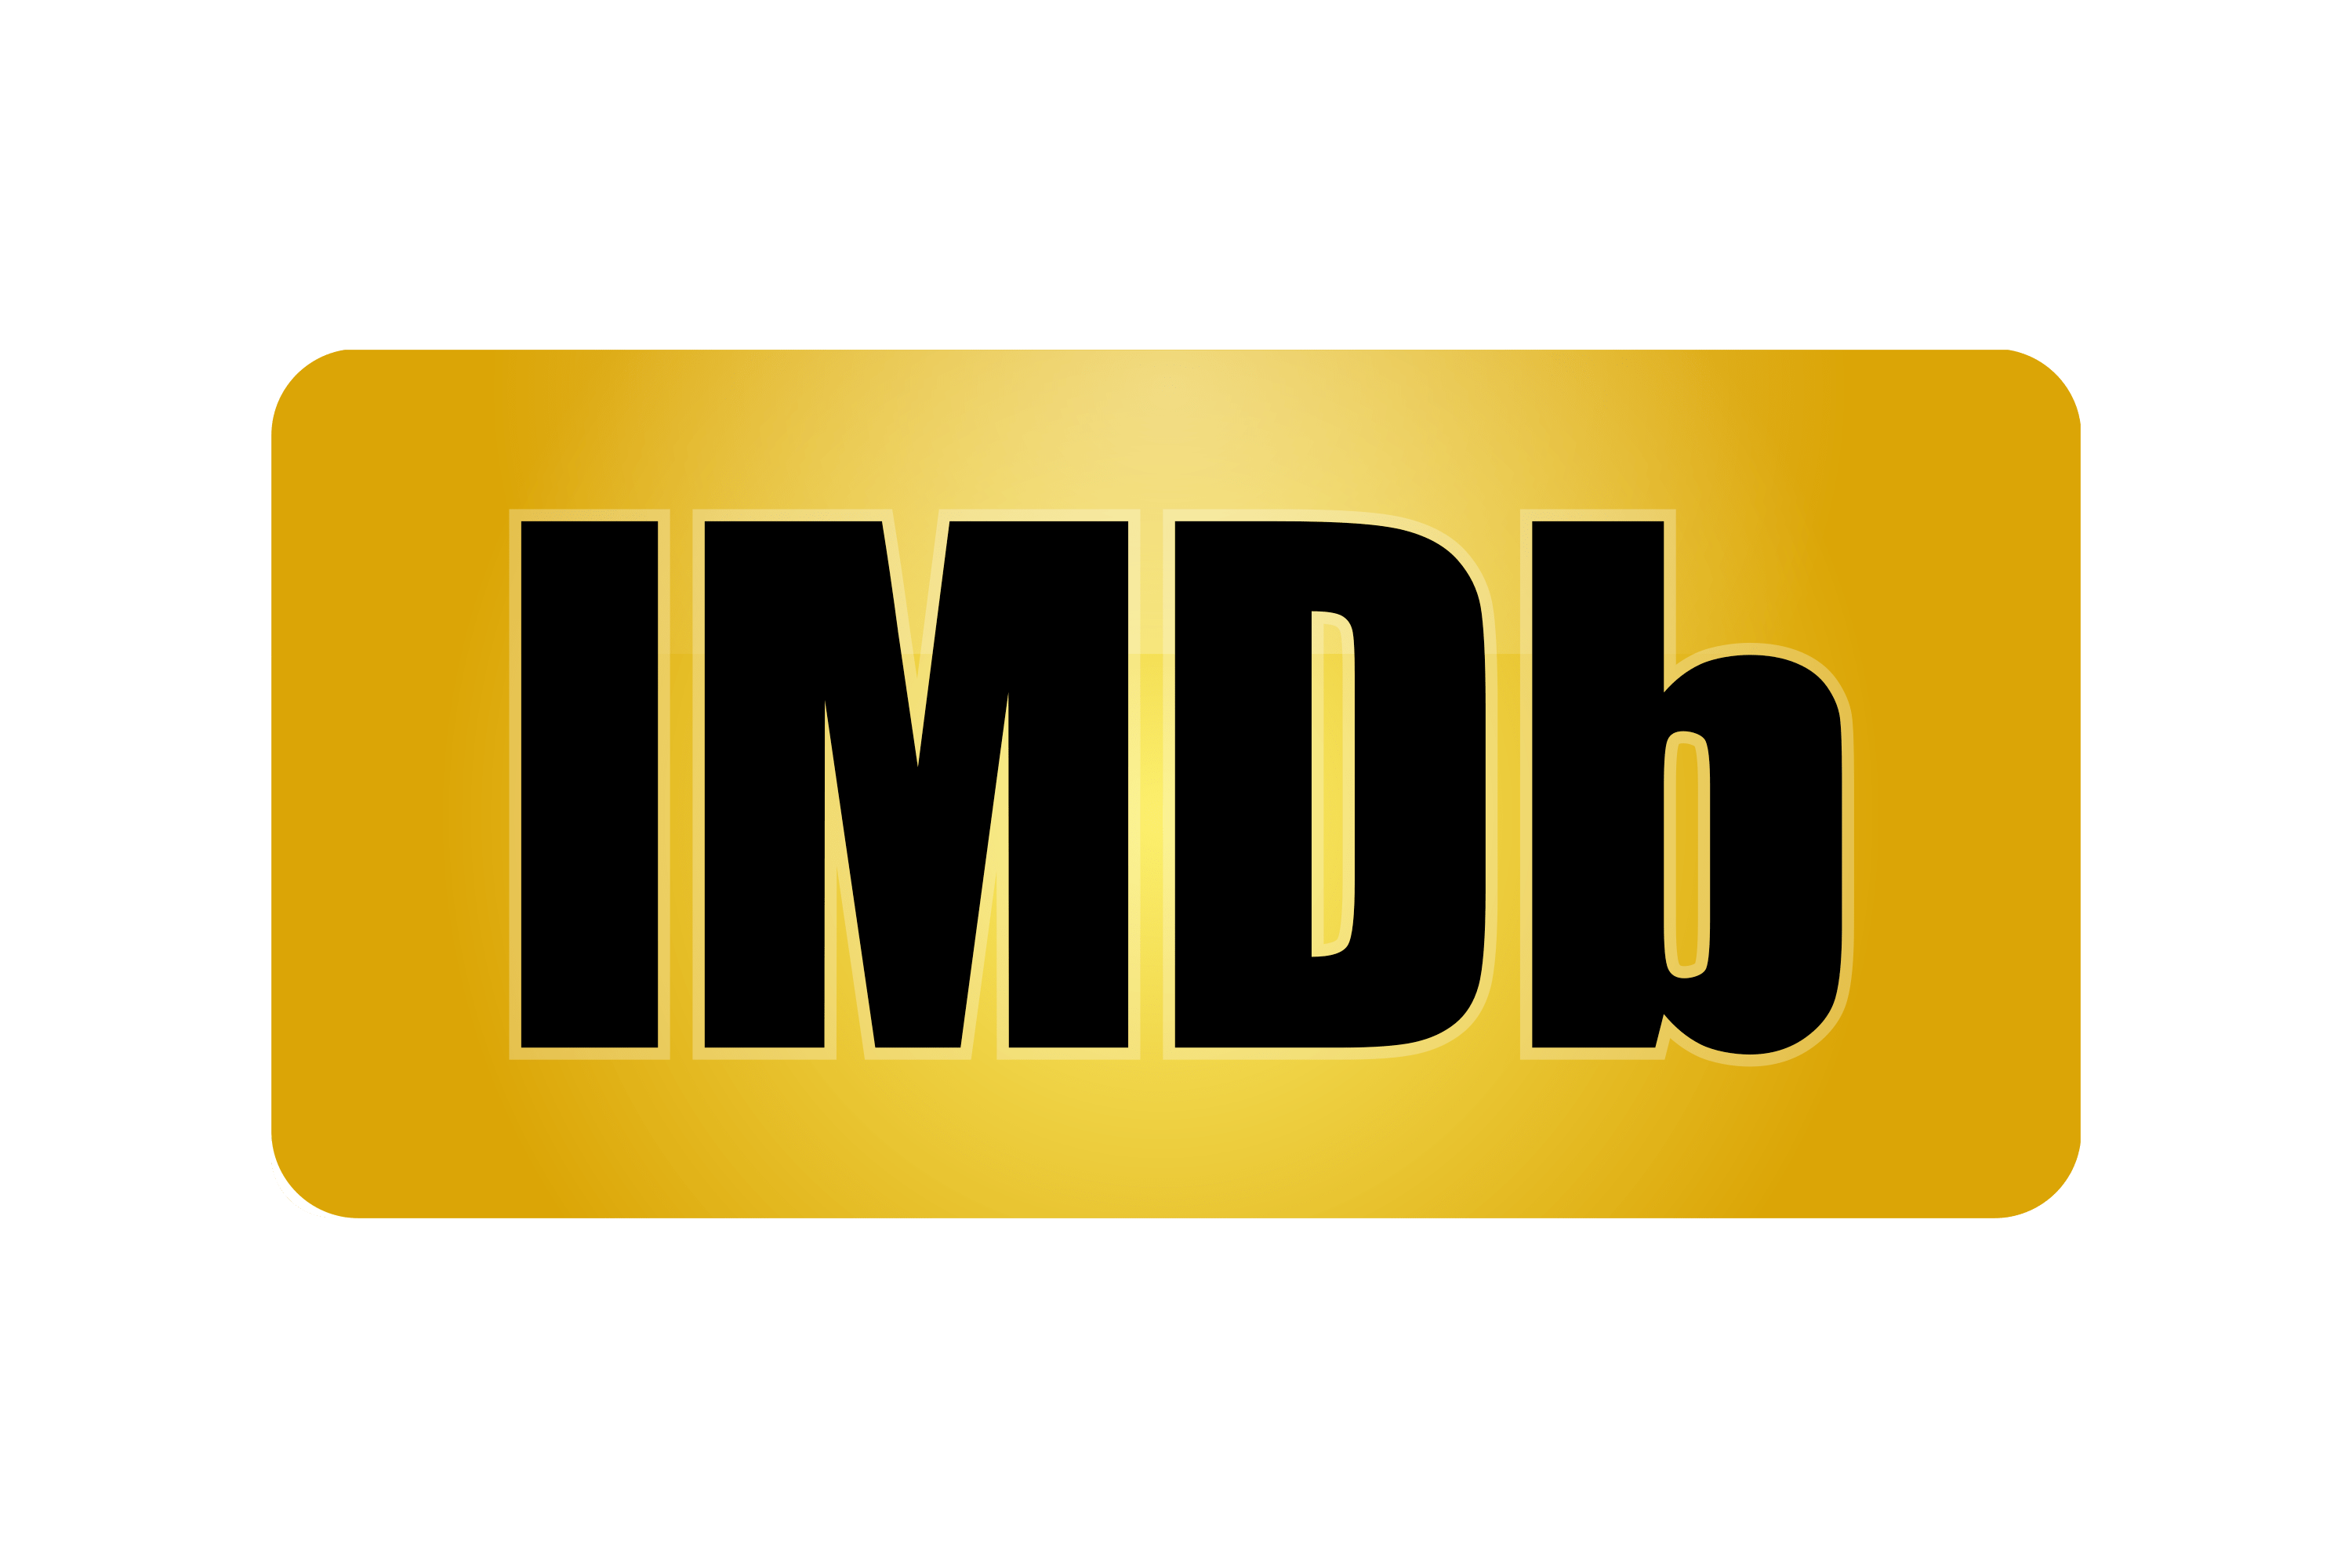 Download Internet Movie Database (IMDb) Logo in SVG Vector or PNG File